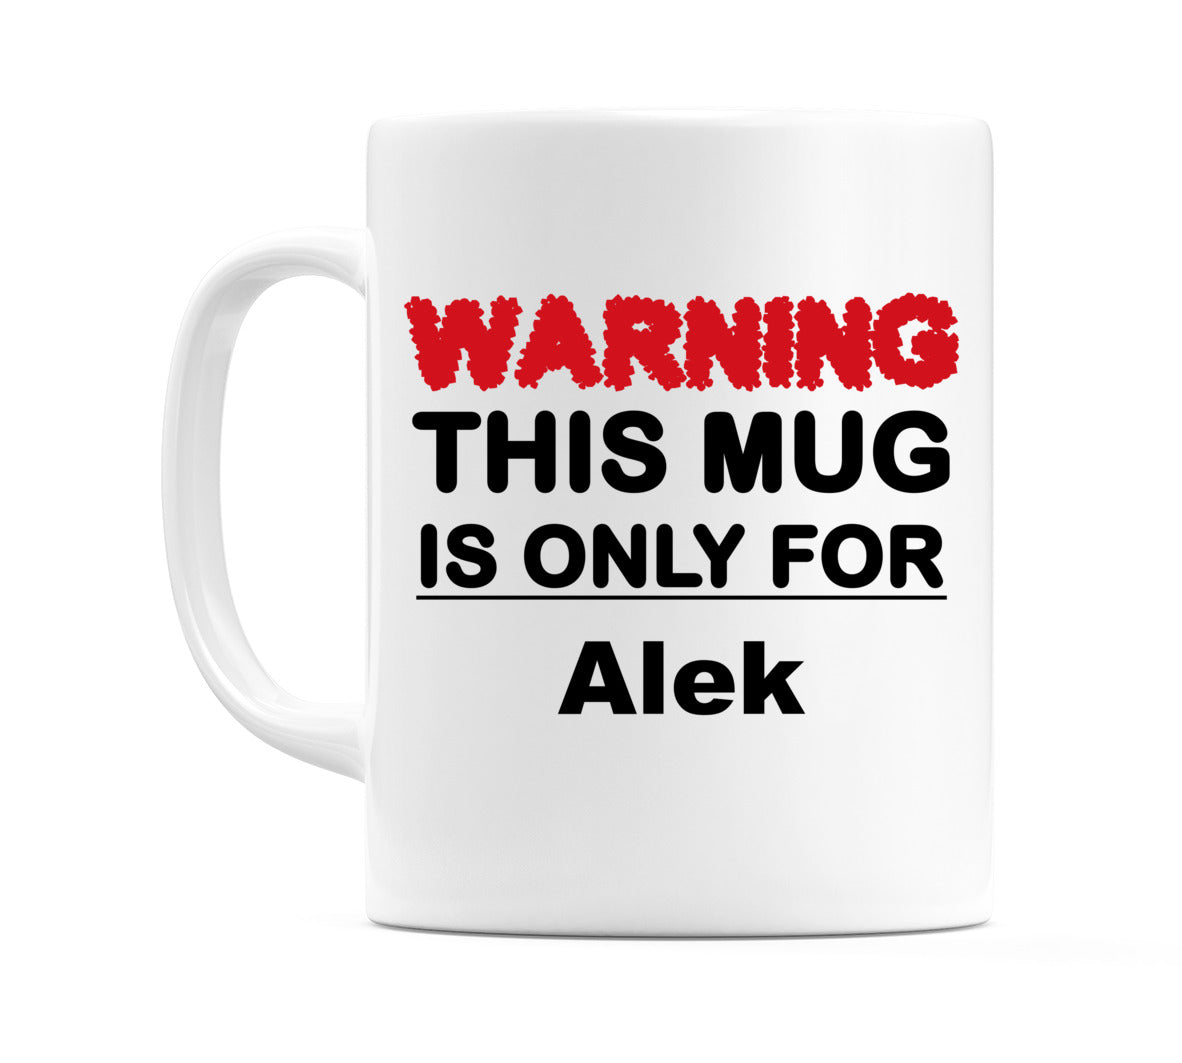 Warning This Mug is ONLY for Alek Mug